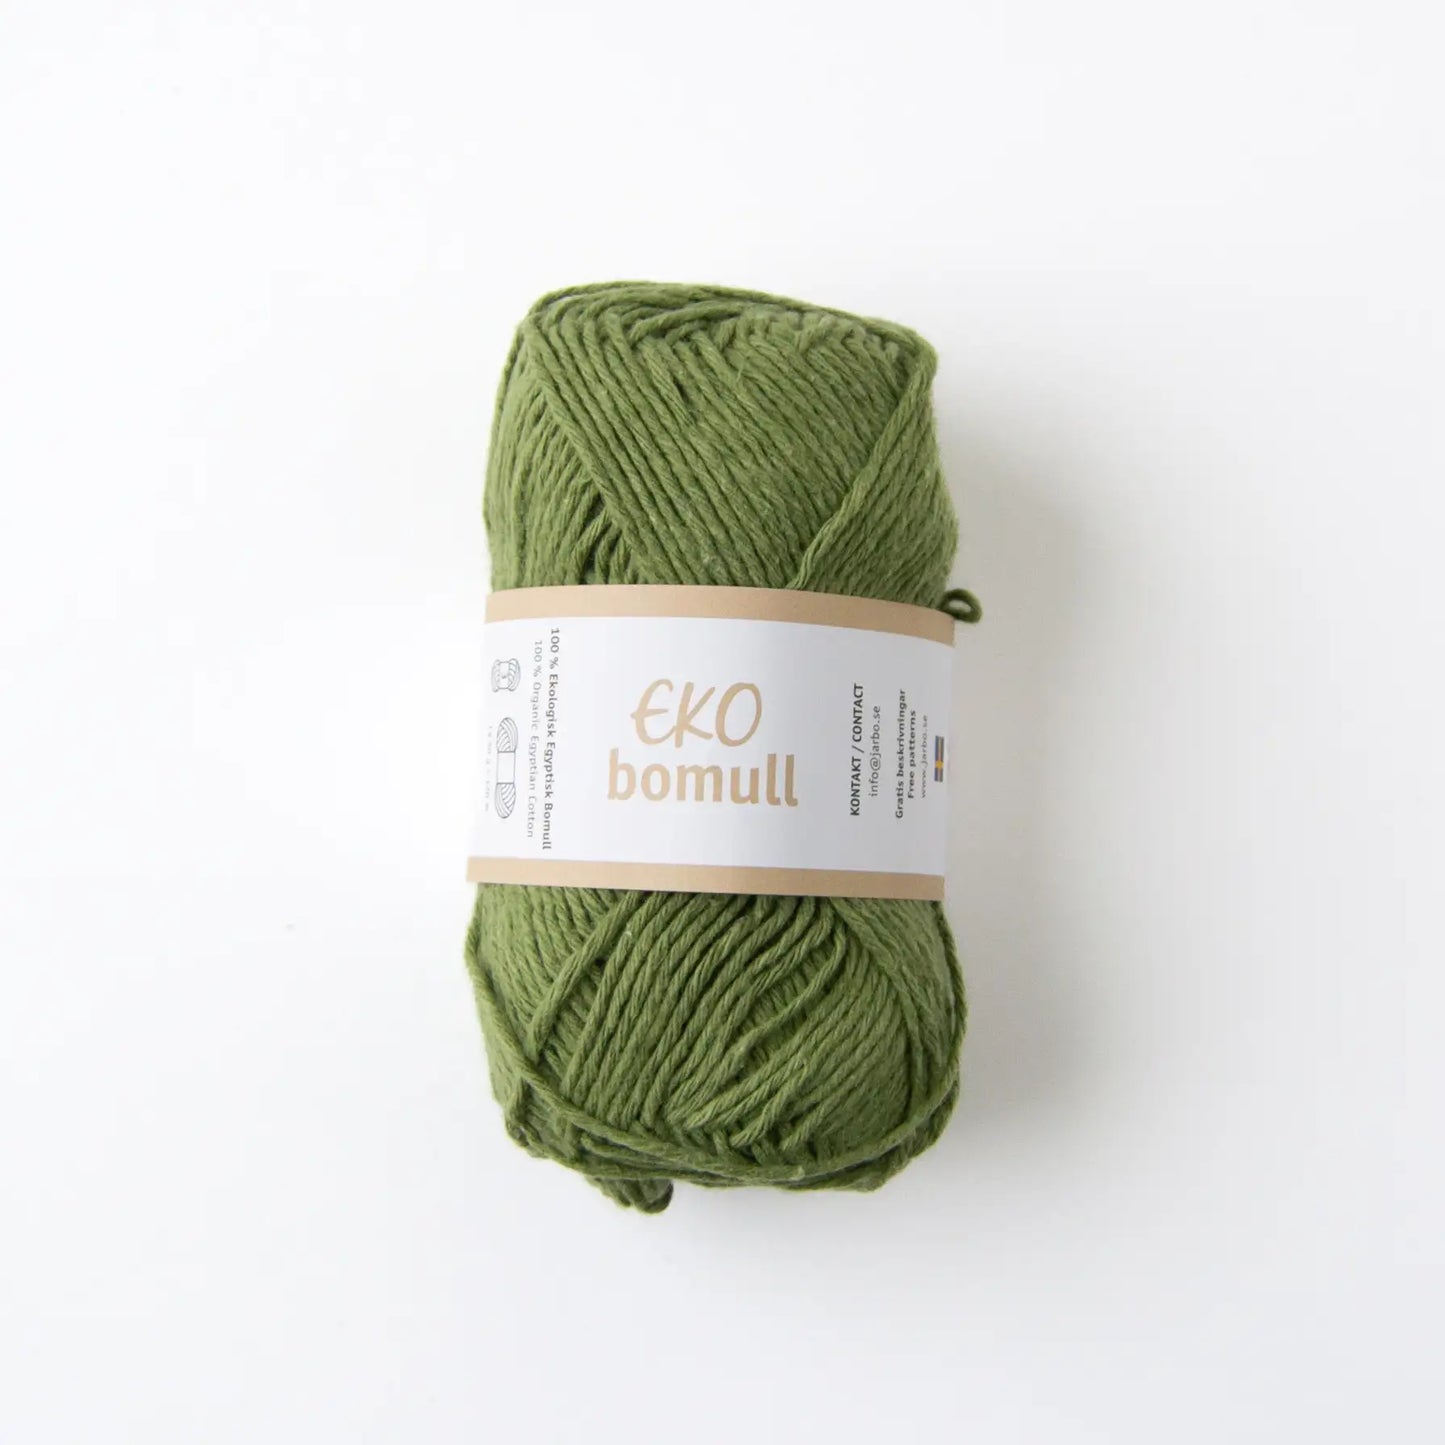 Järbo eco cotton | Organic cotton yarn